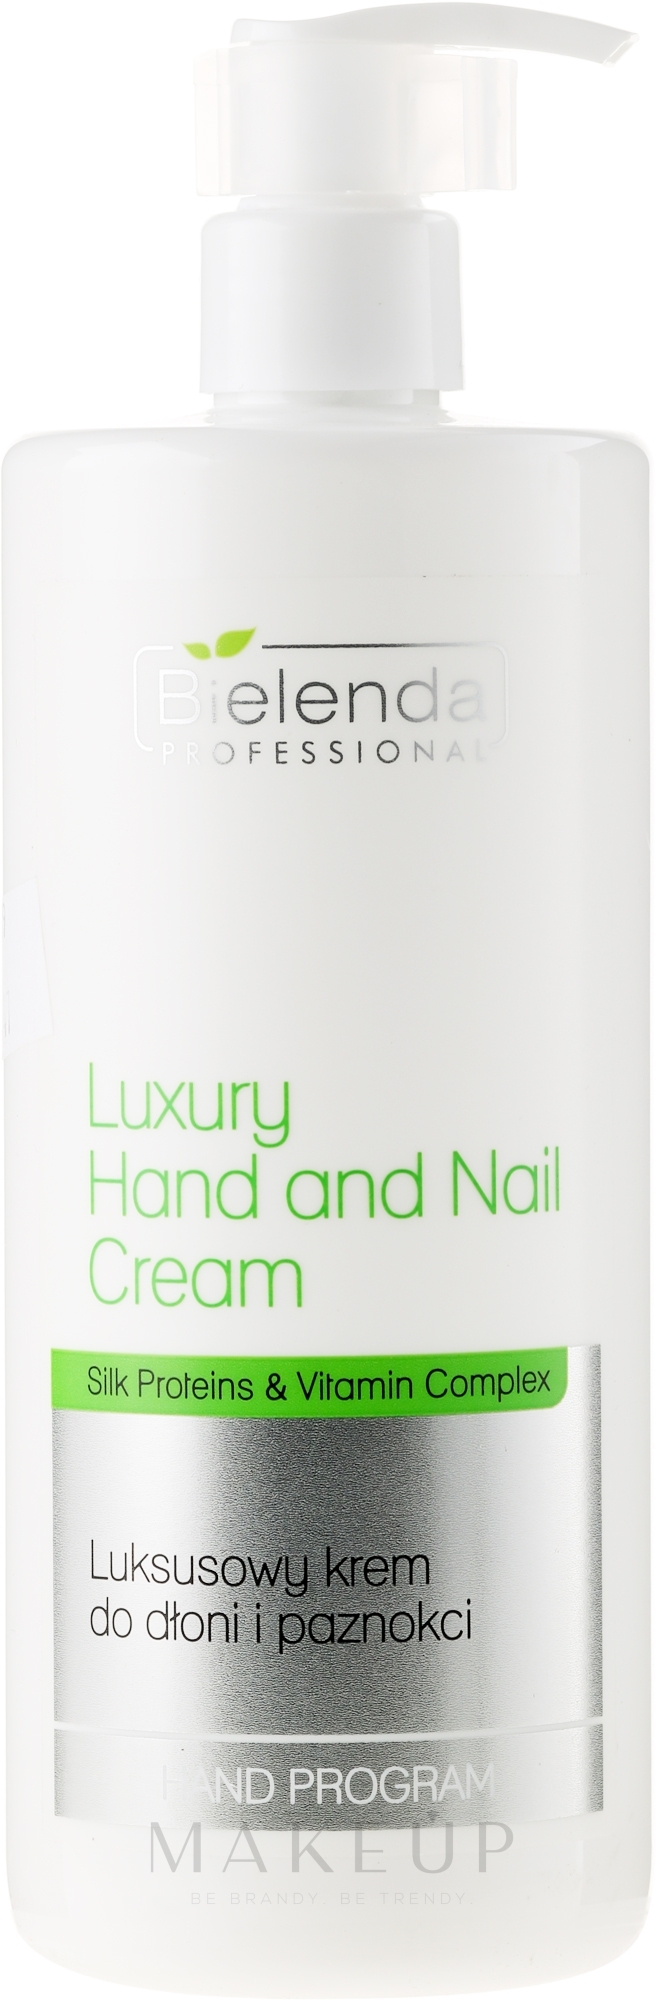 Hand- und Nagelcreme - Bielenda Professional Luxury Hand and Nail Cream — Bild 500 ml